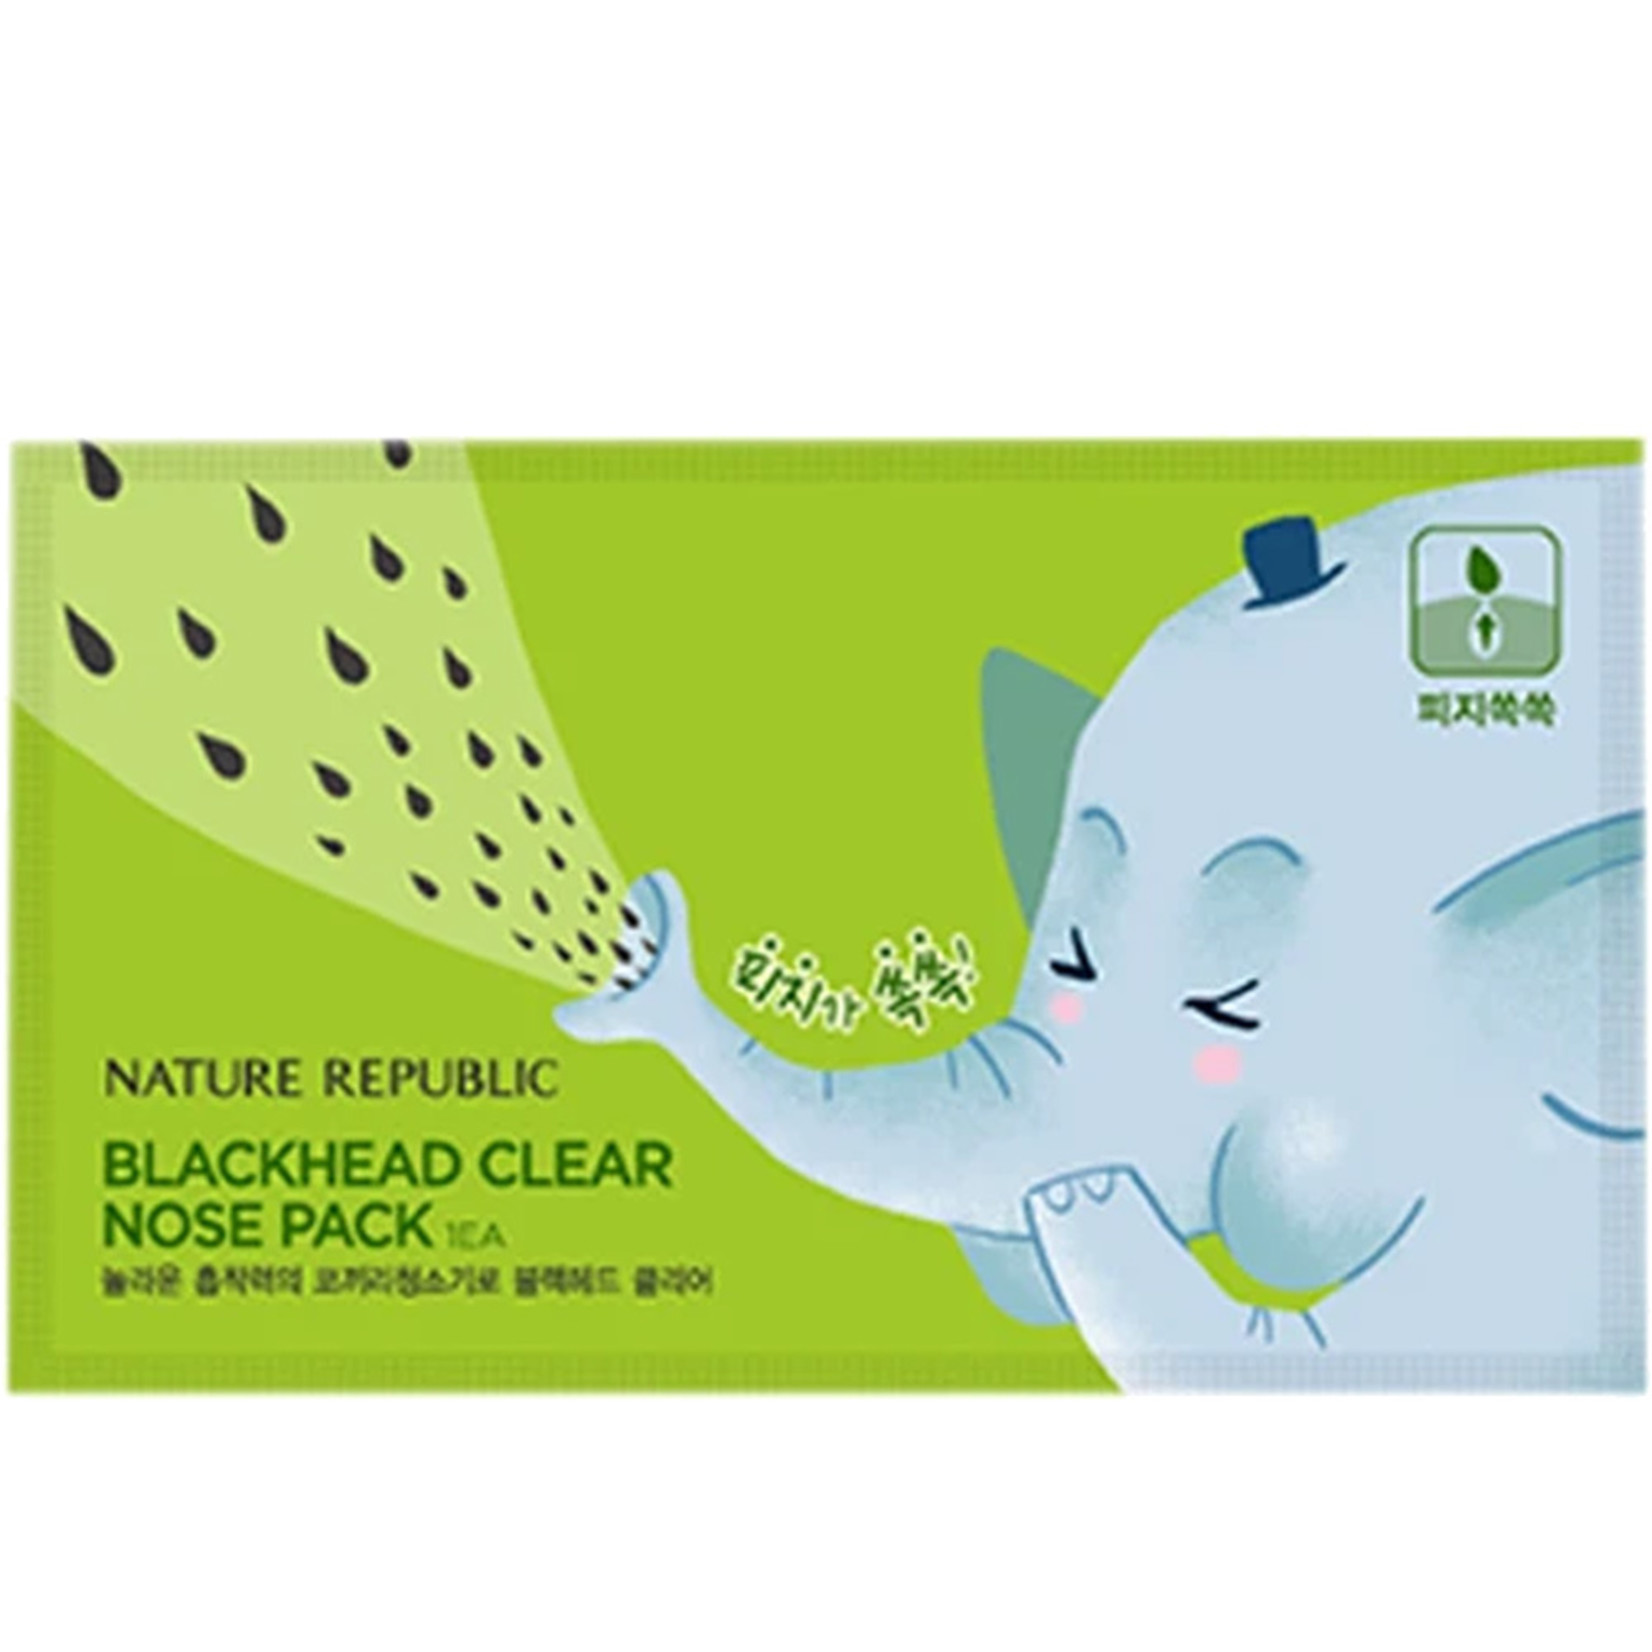 Nature Republic Blackhead Clear Nose Pack (7 pcs)